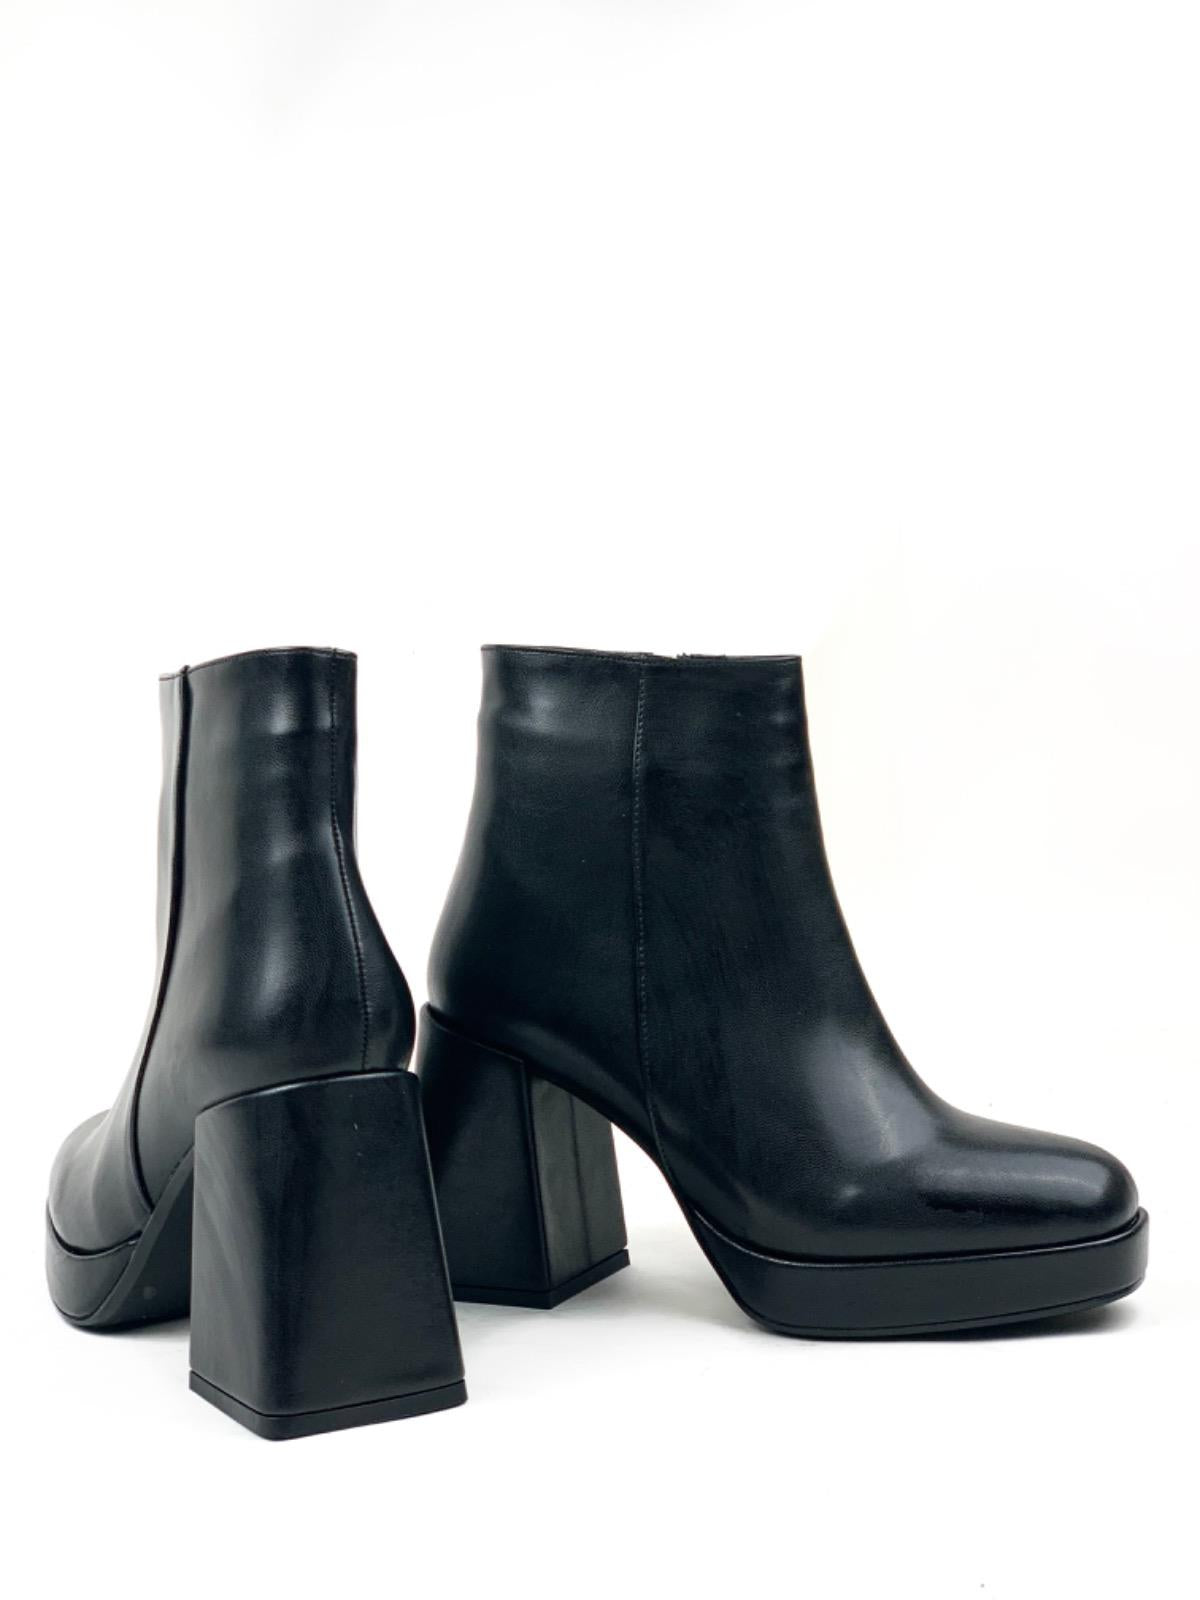 Women's Sand Black Platform Heeled Short Leather Boots - STREETMODE ™